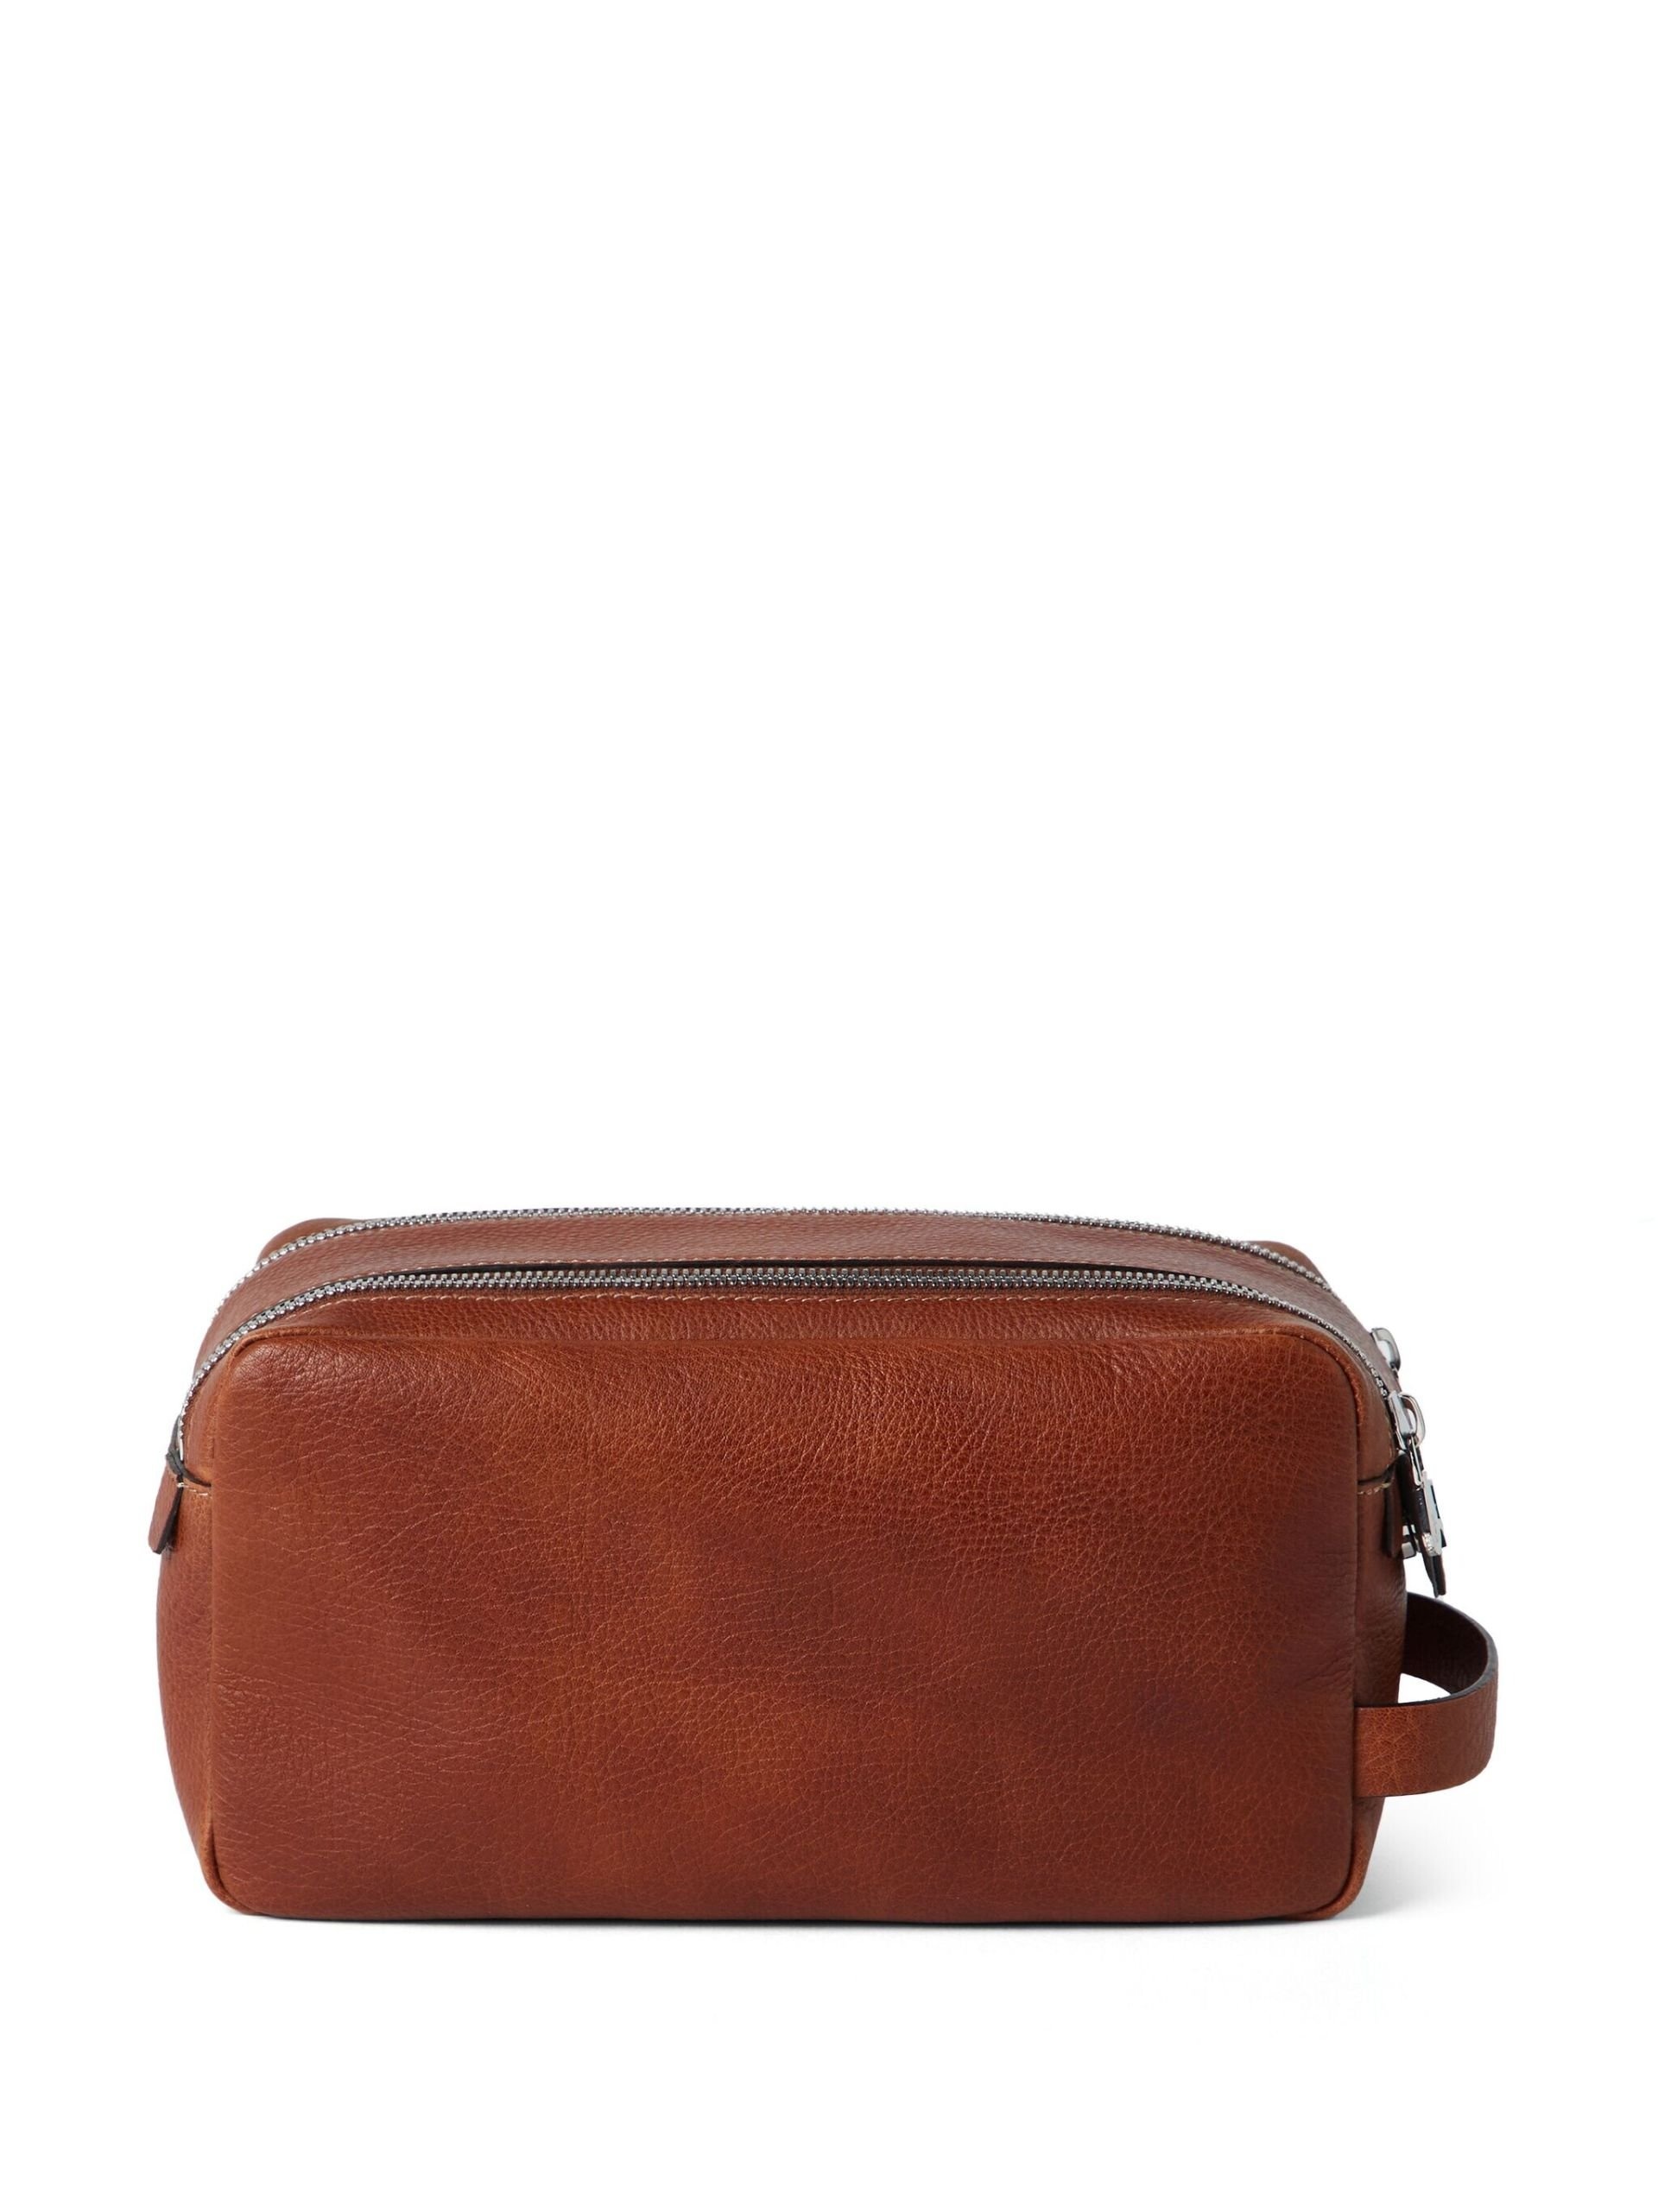 brown leather washbag - 2